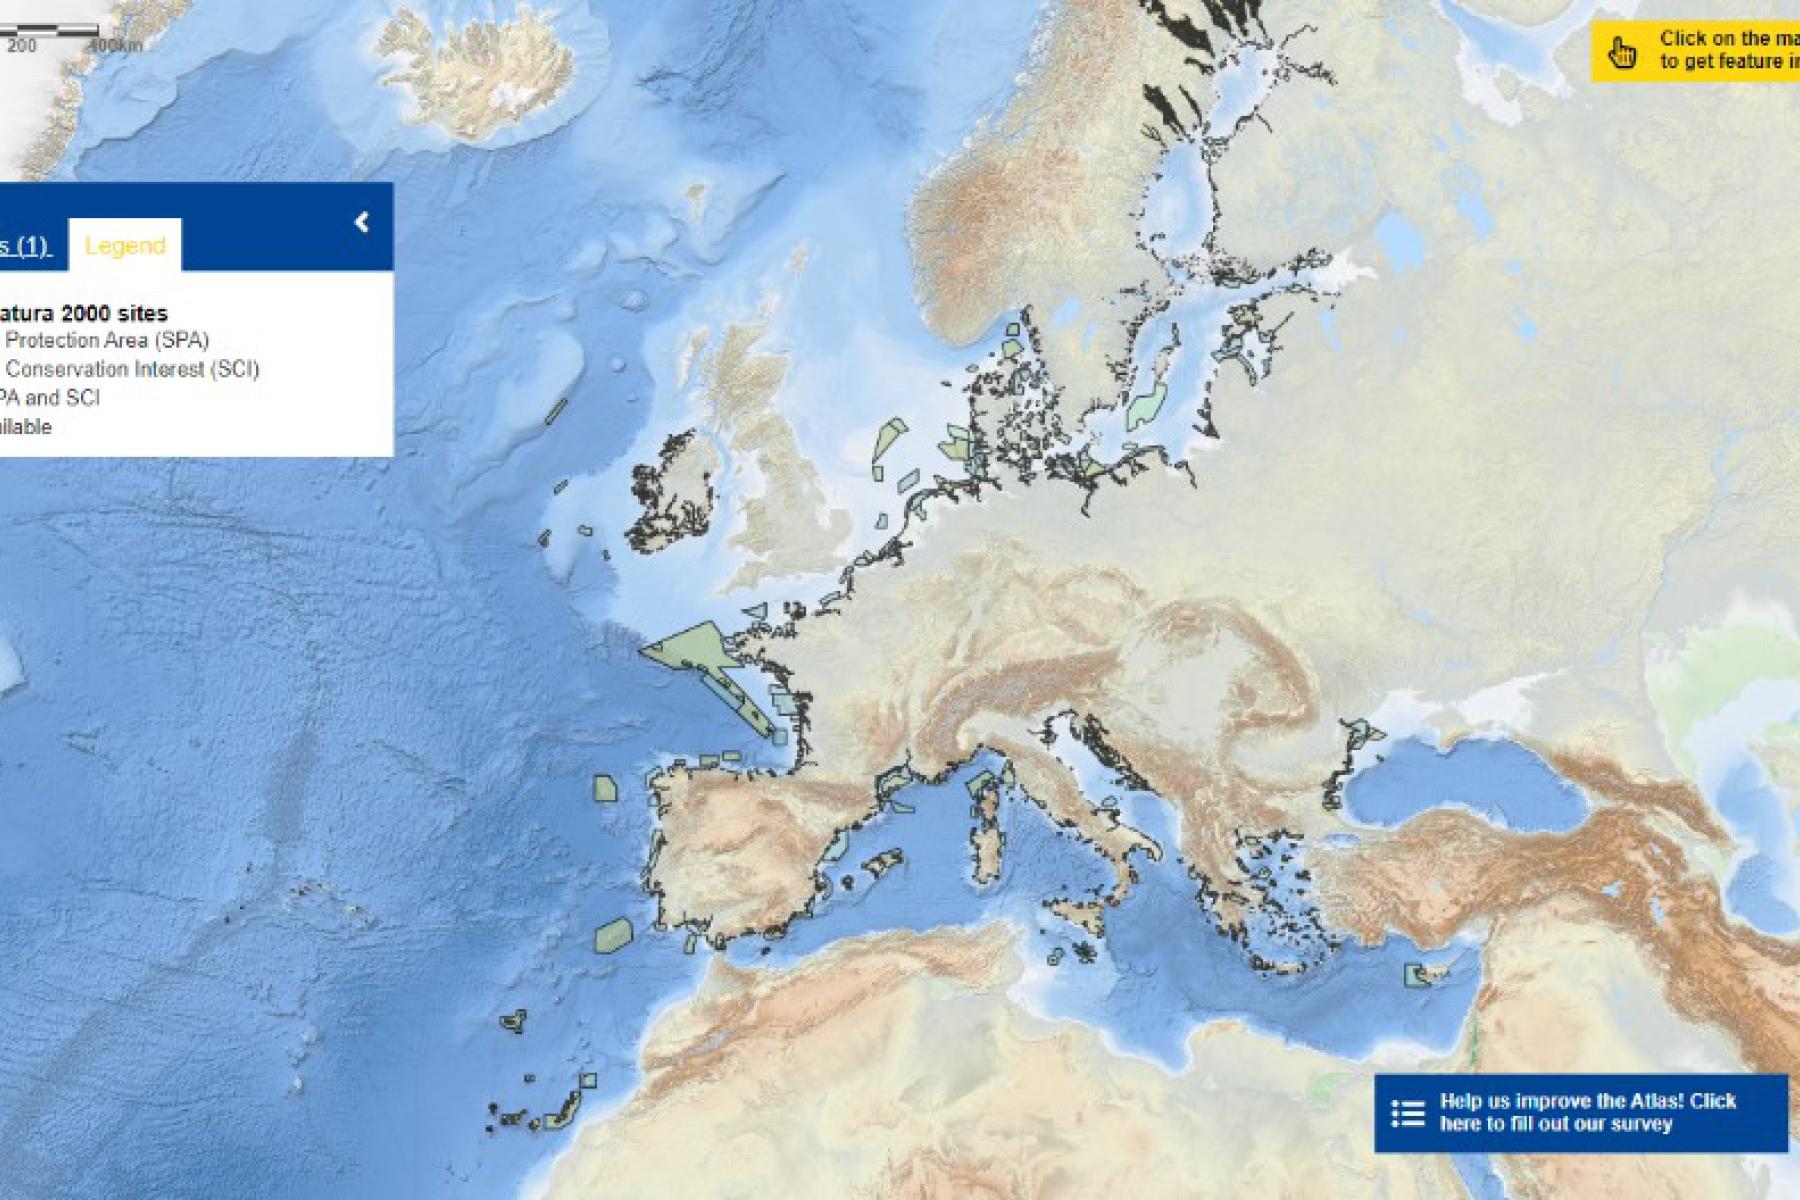 Network of marine Natura 2000 sites across Europe